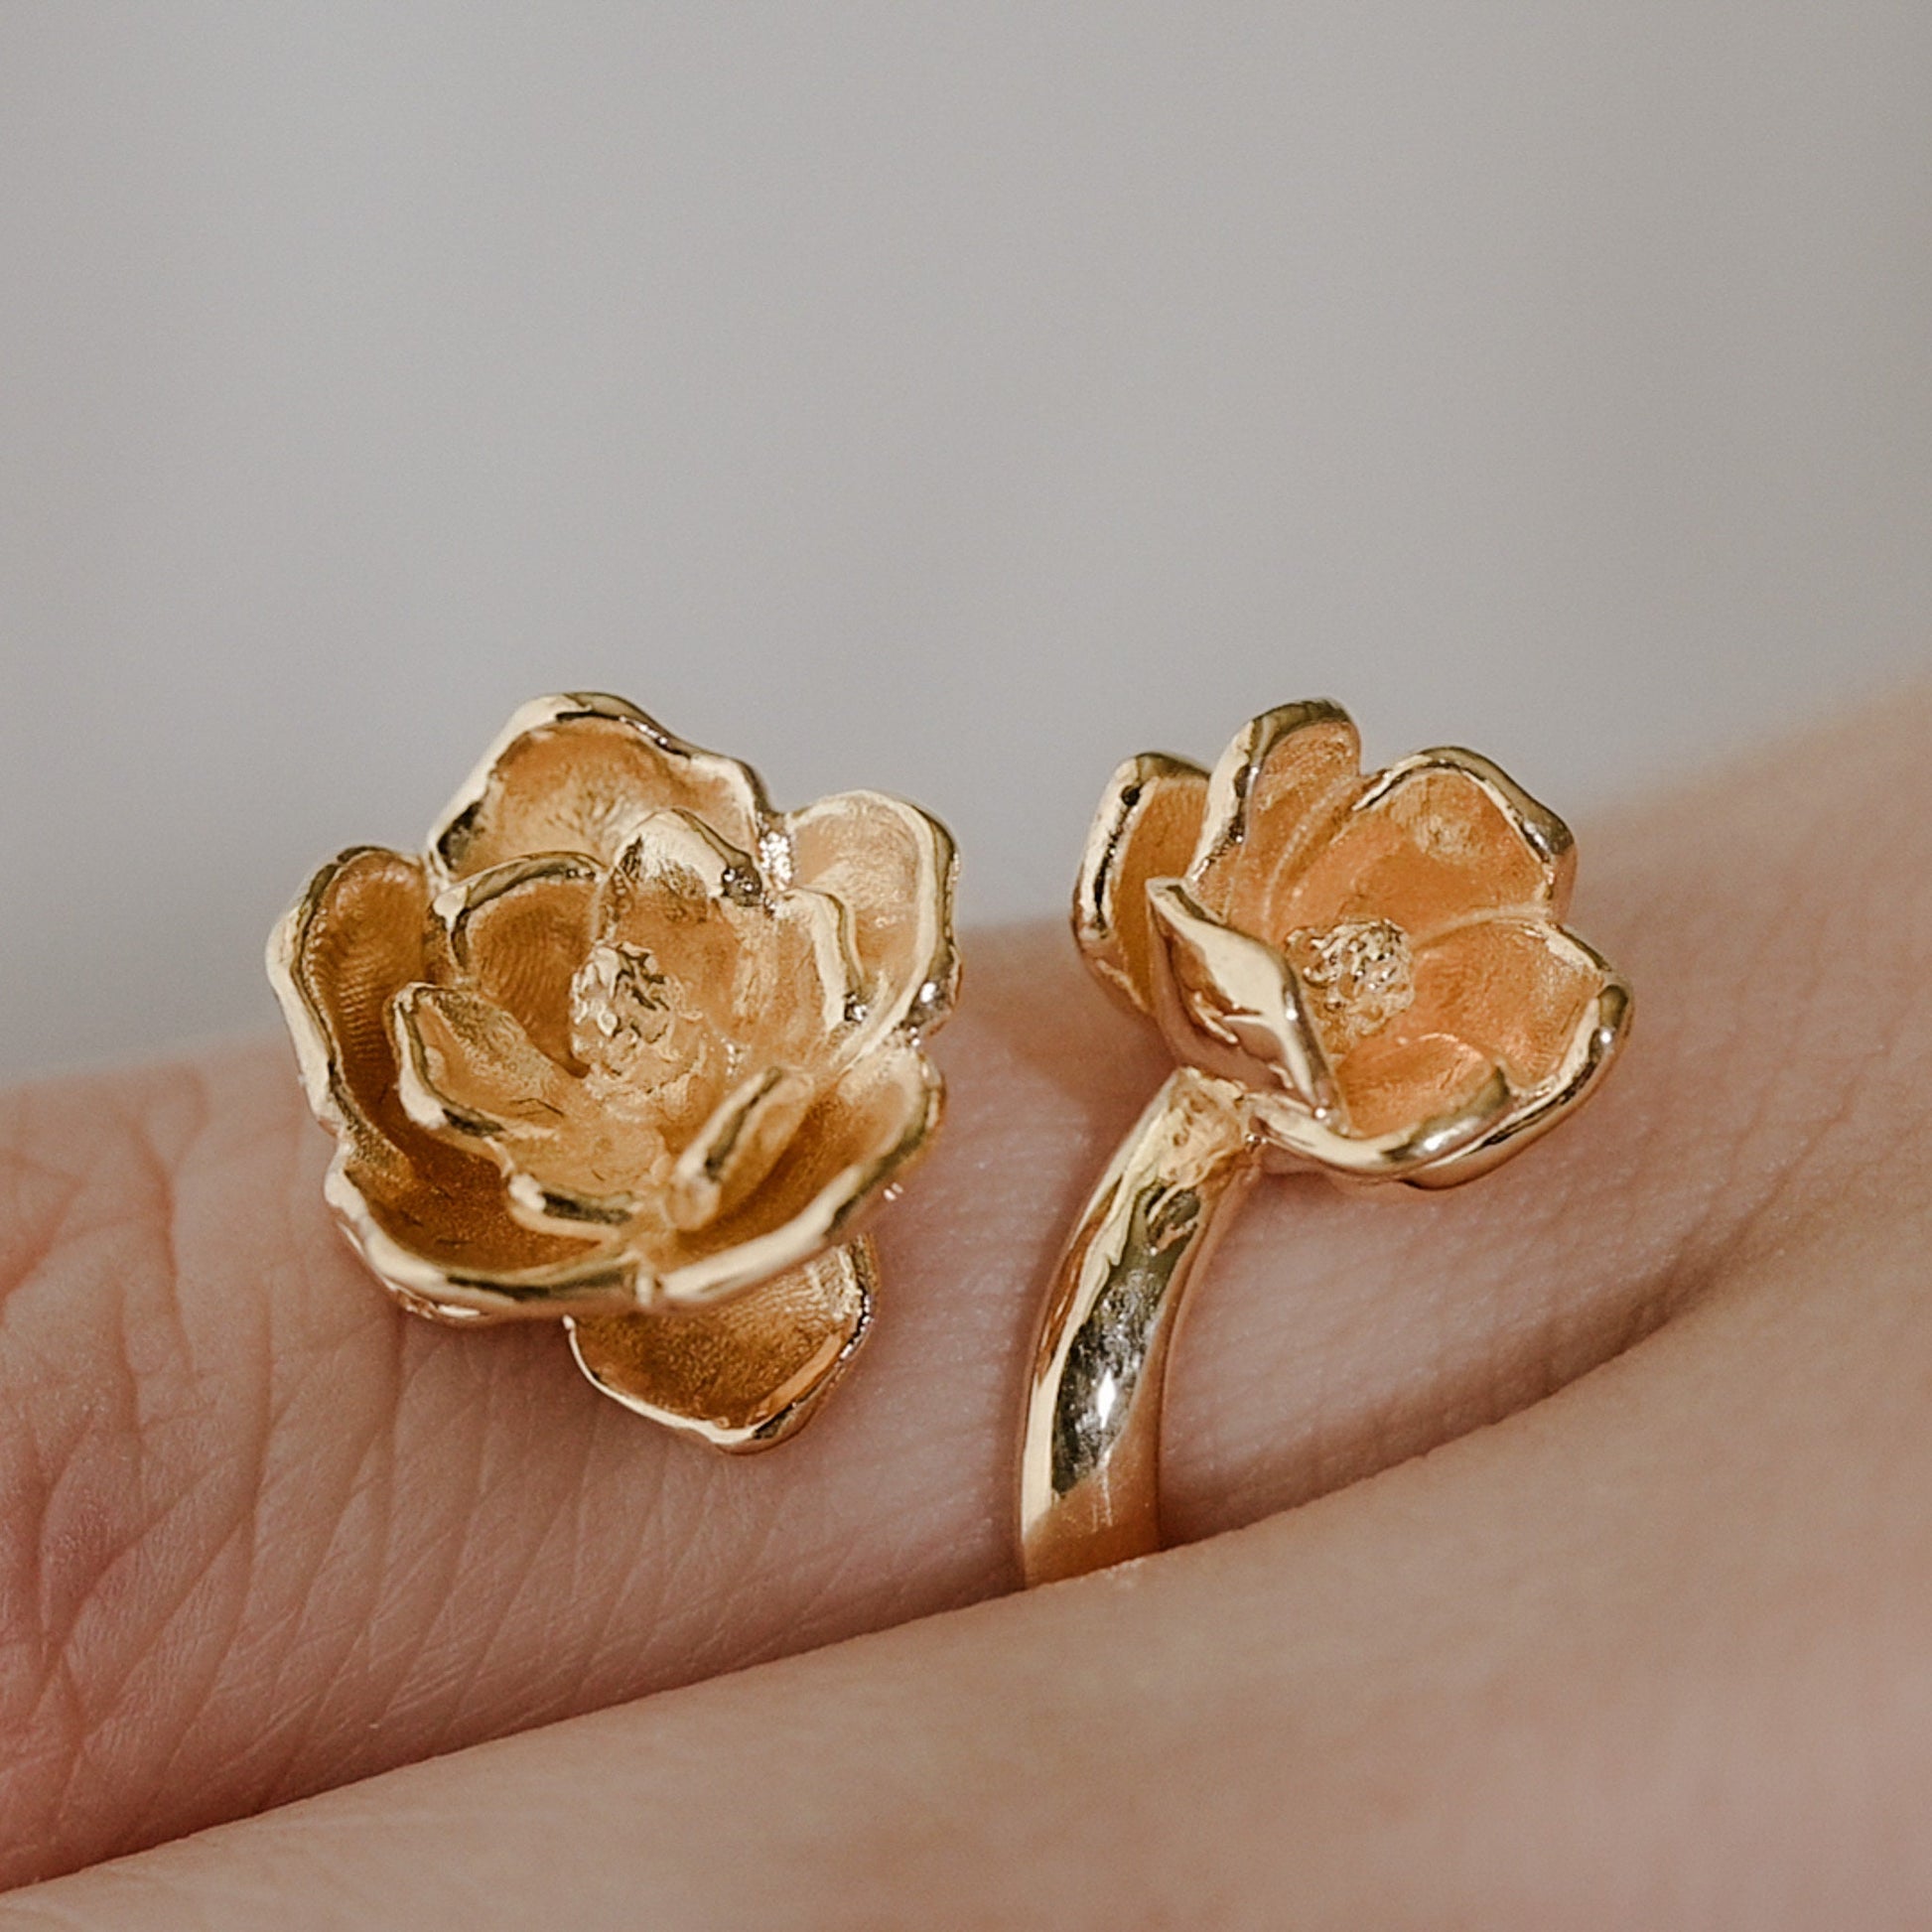 Buy Wholesale China Rose Gold 10-piece Multipurpose Latest Design